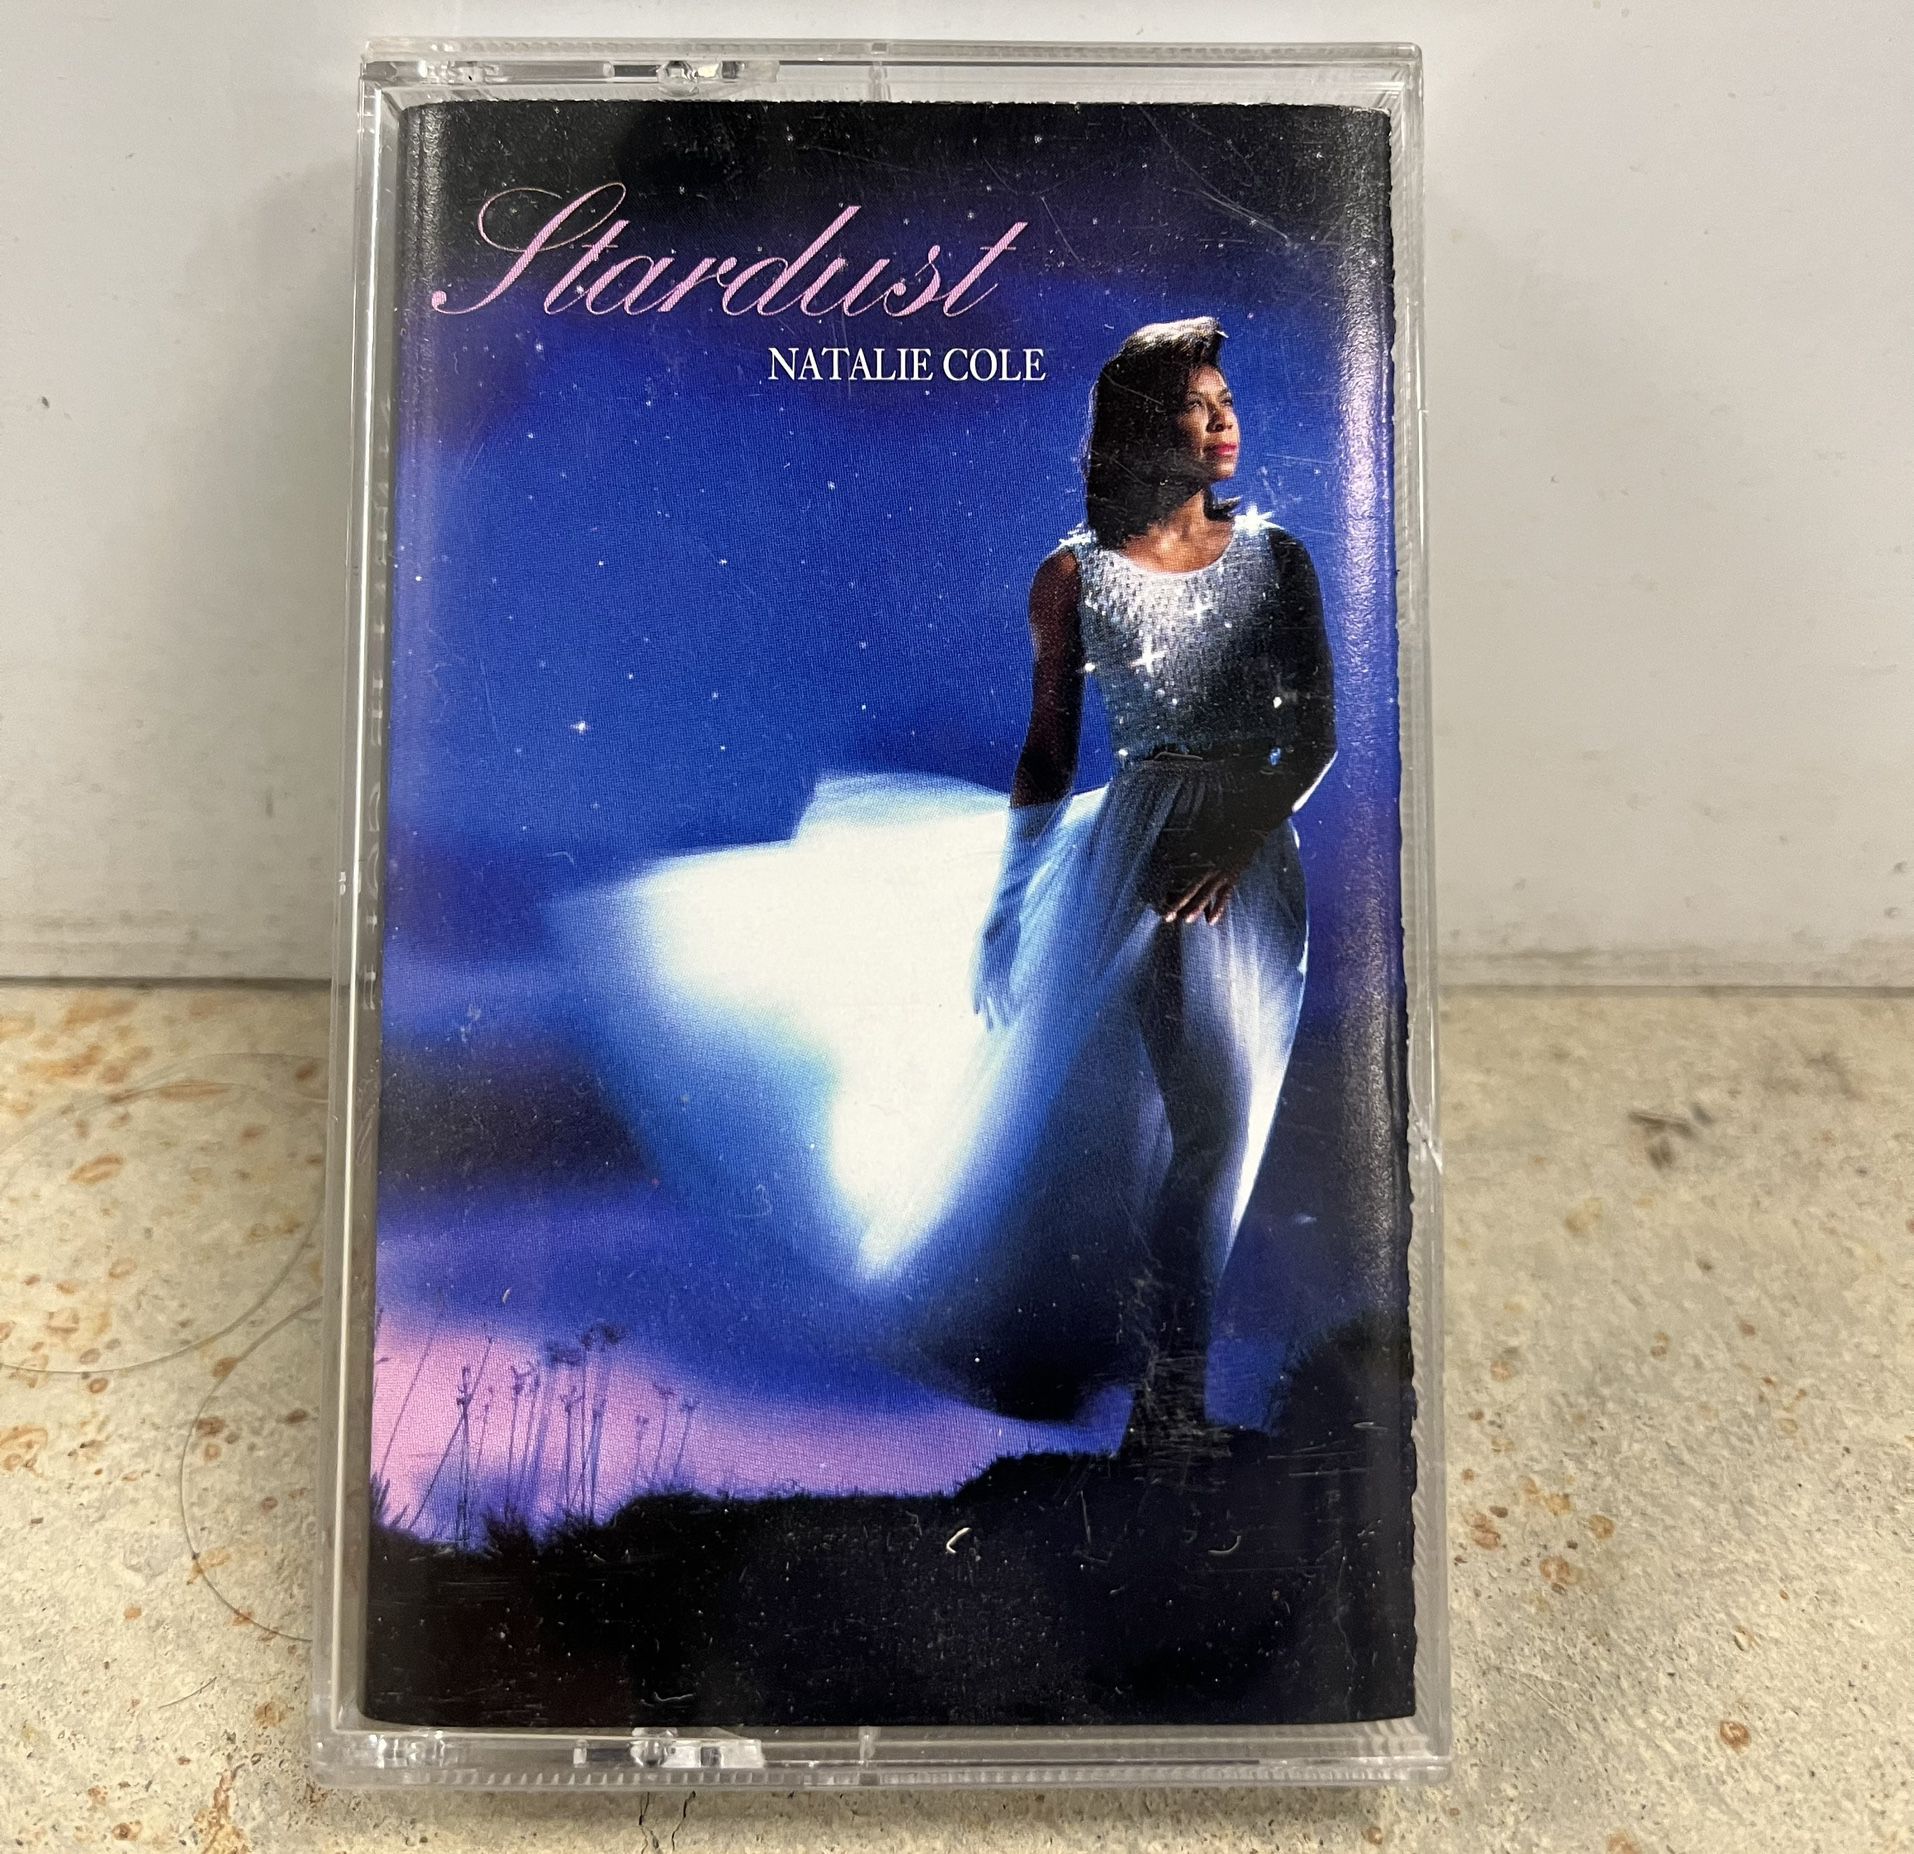 Natalie Cole Cassette Tape 1996 Stardust Vintage Music Love Songs R&B Media